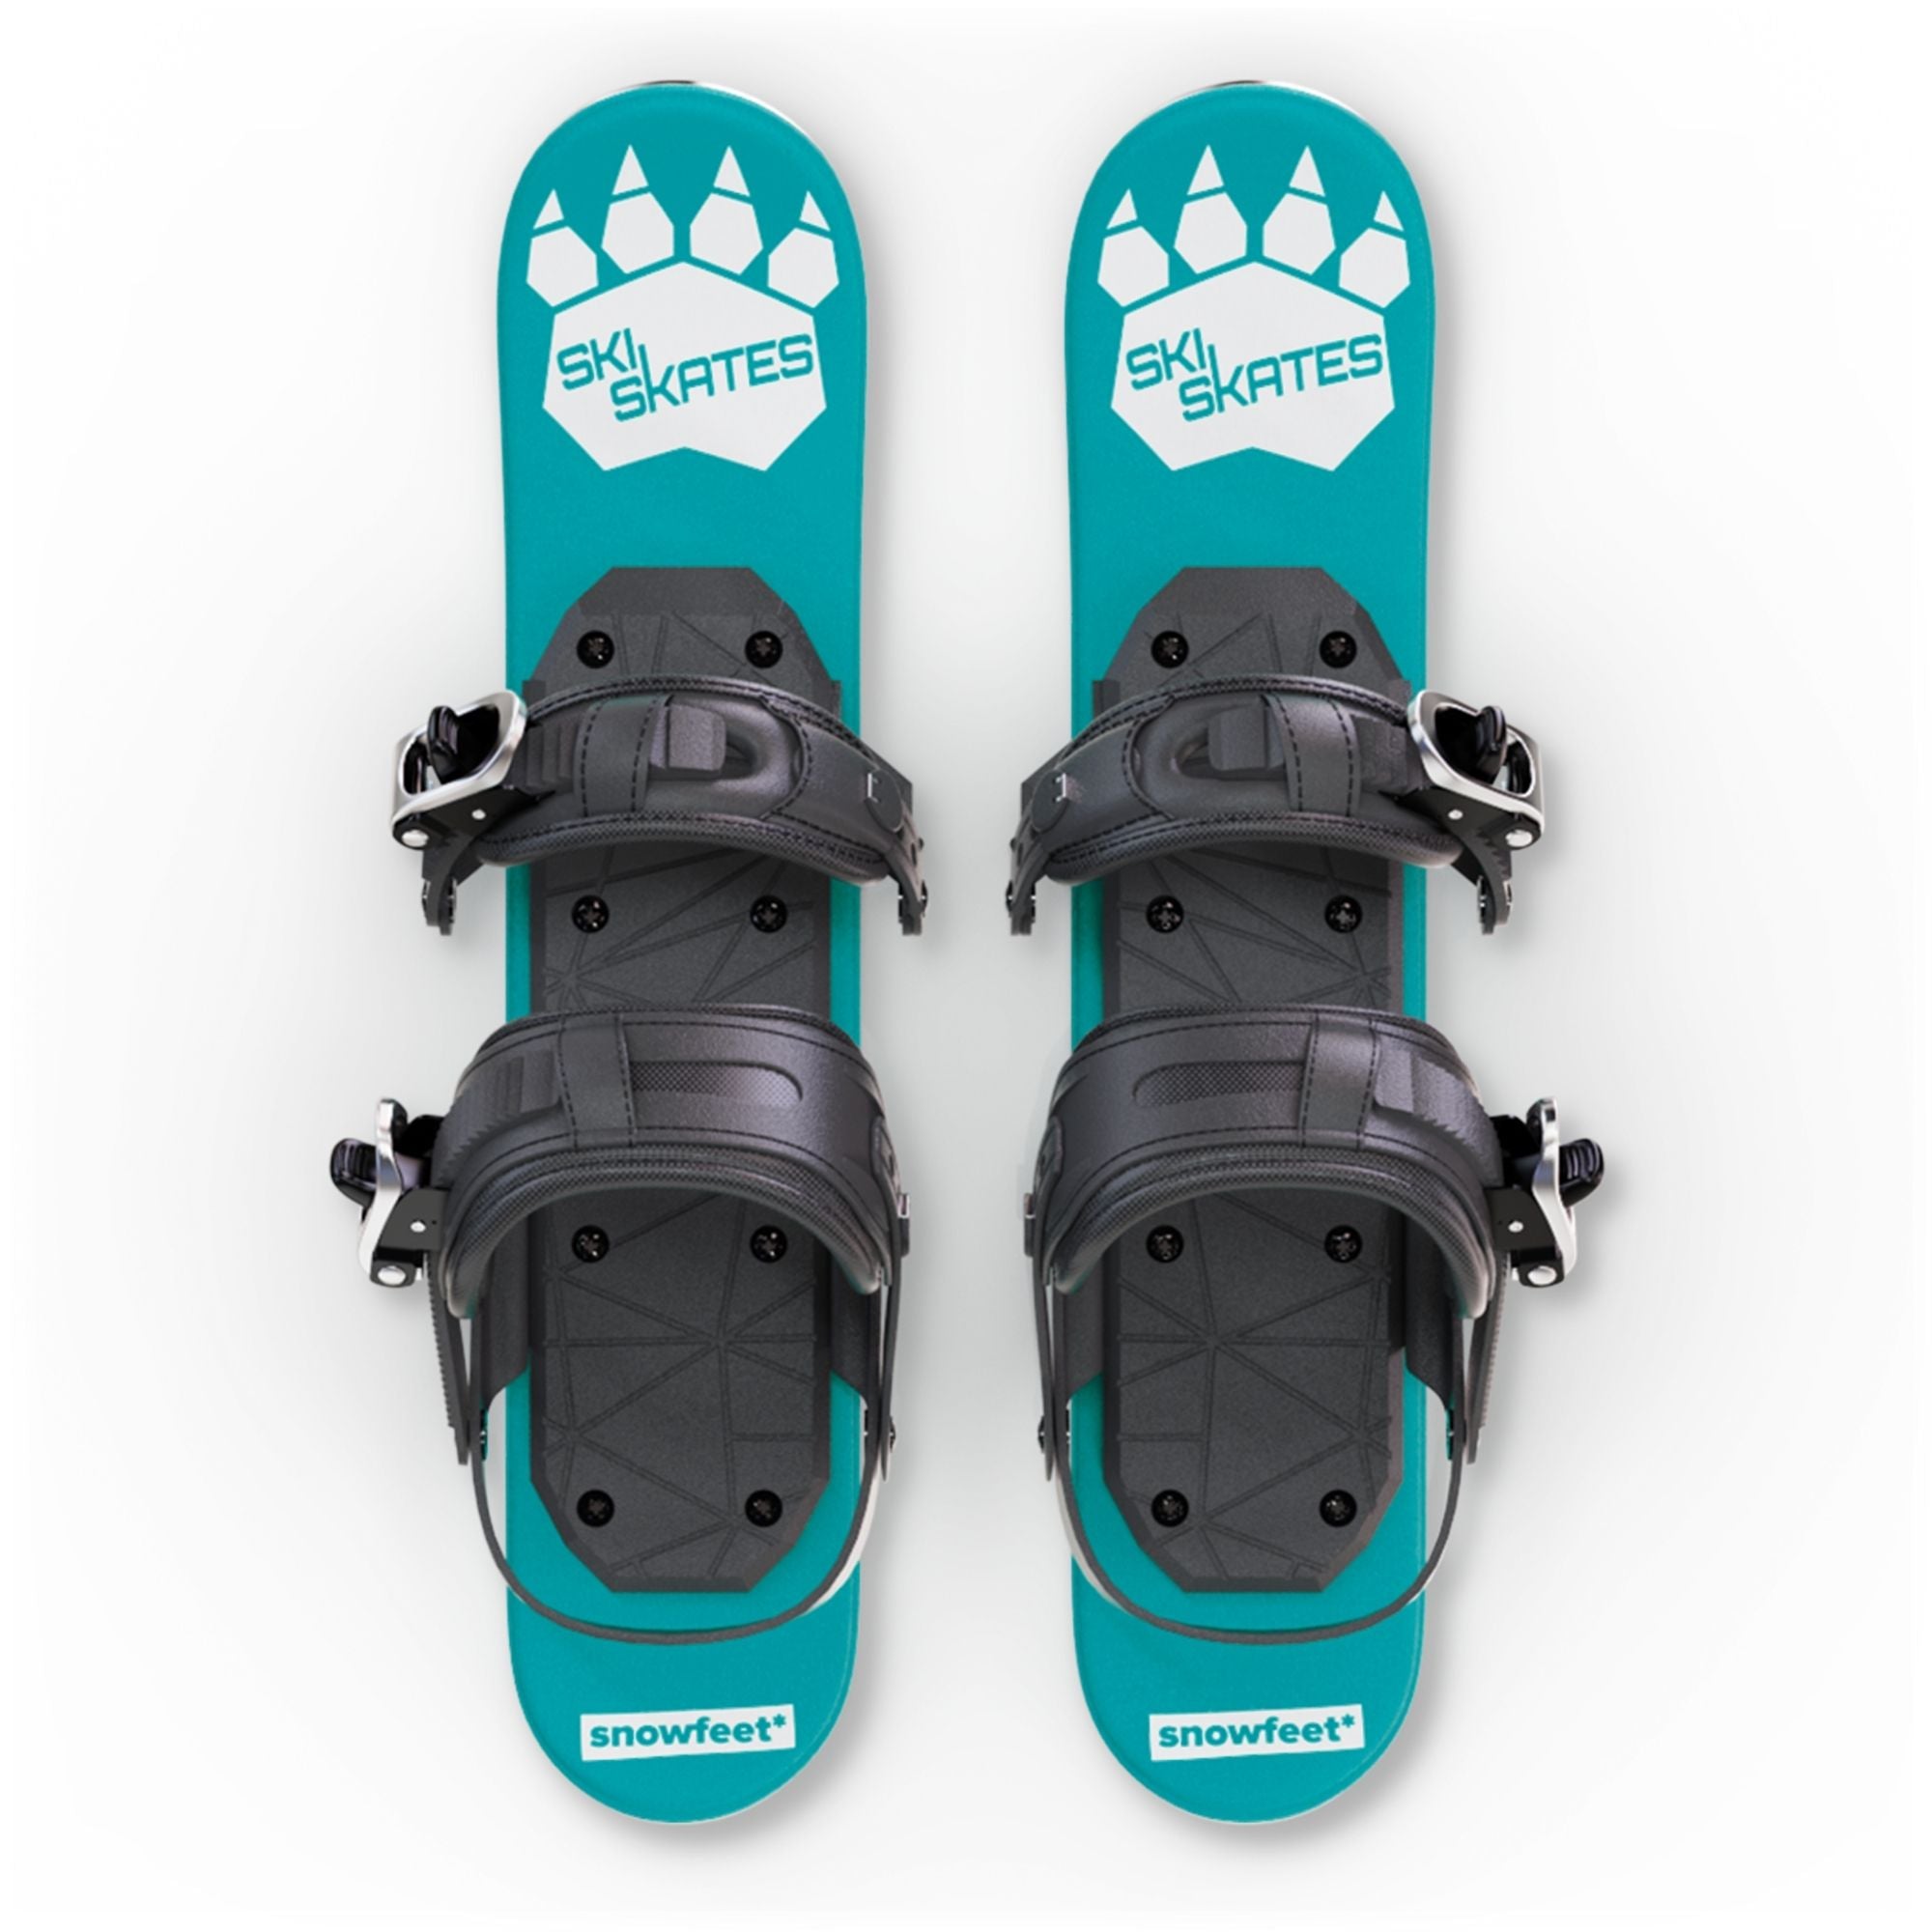 Skiskates - Mini Skis - Official Website - Reviews | Price $299.90